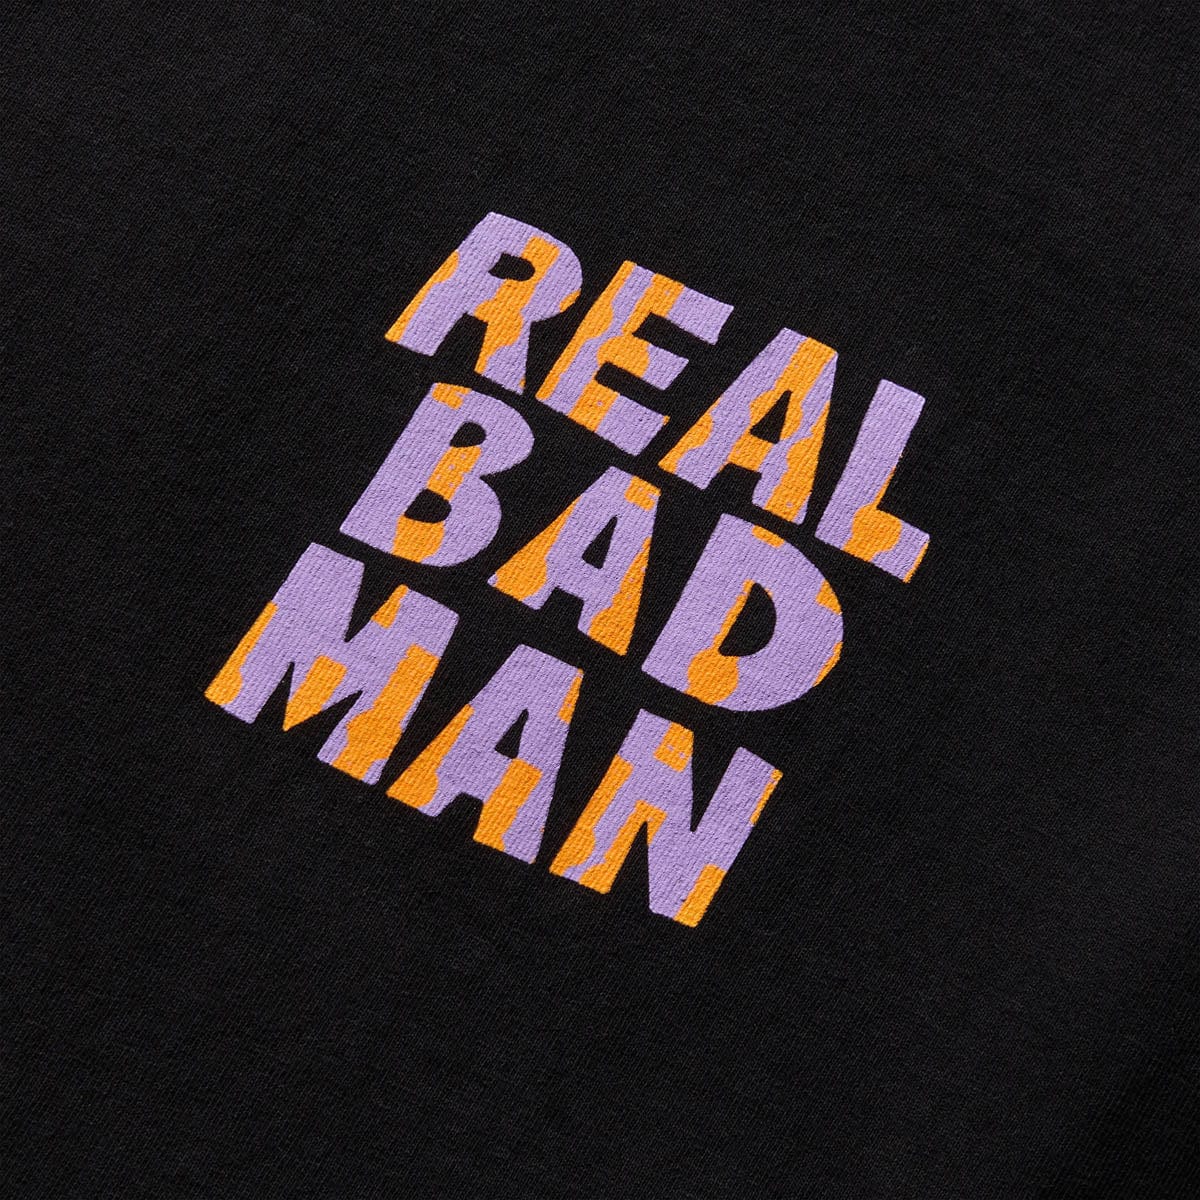 Real Bad Man T-Shirts RBM LOGO VOL 10 SS TEE